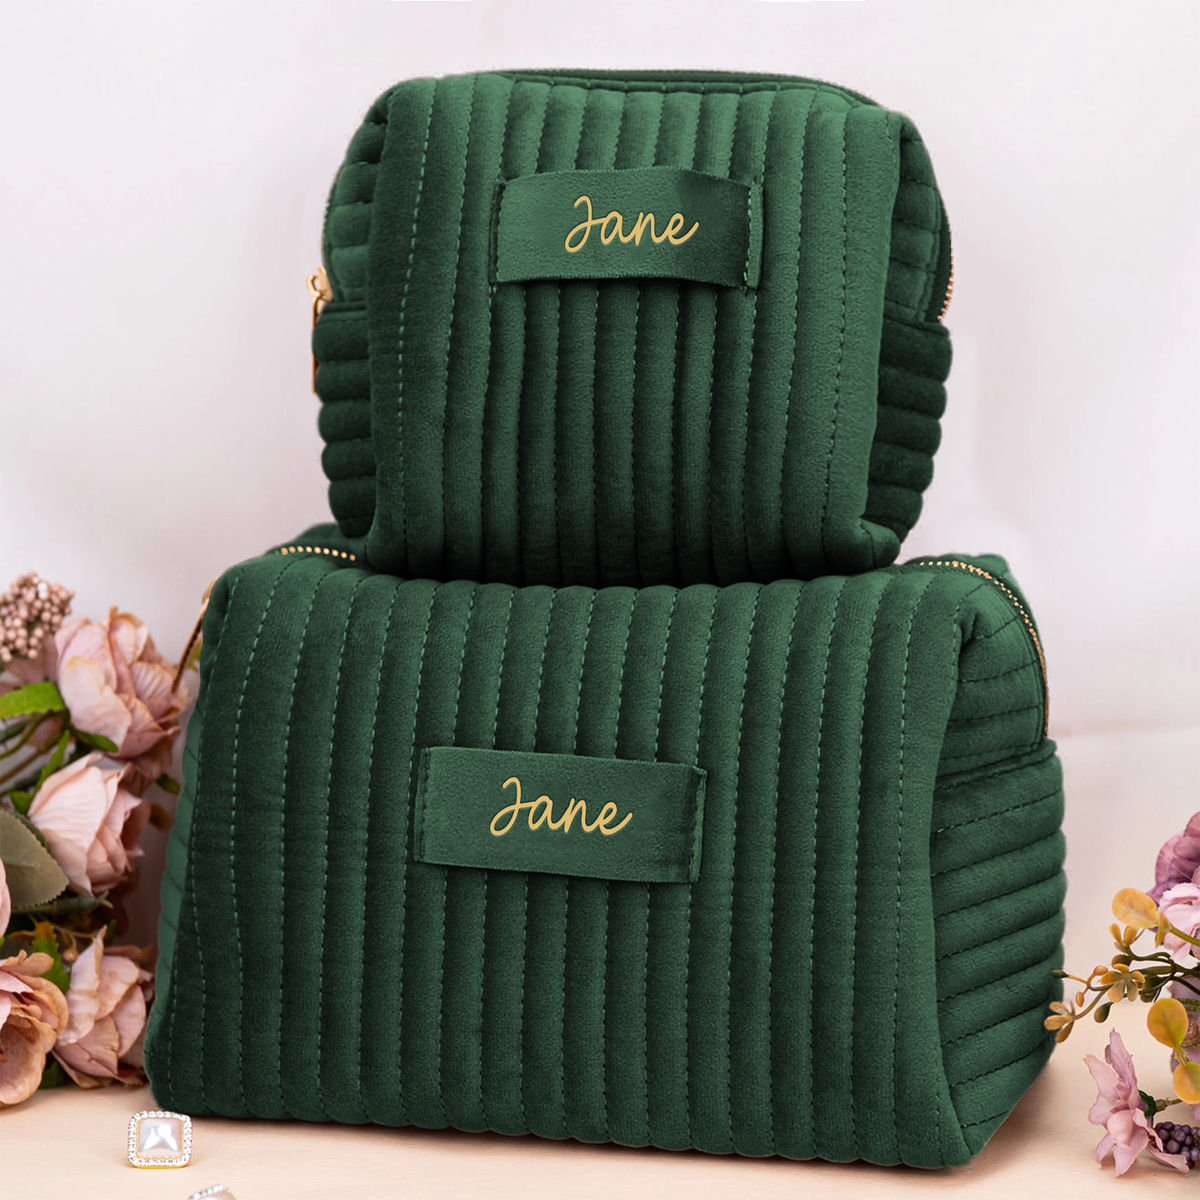 Personalized Bag - Personalized Name - Personalized Gift Bags - Custom Your Name - Green_3